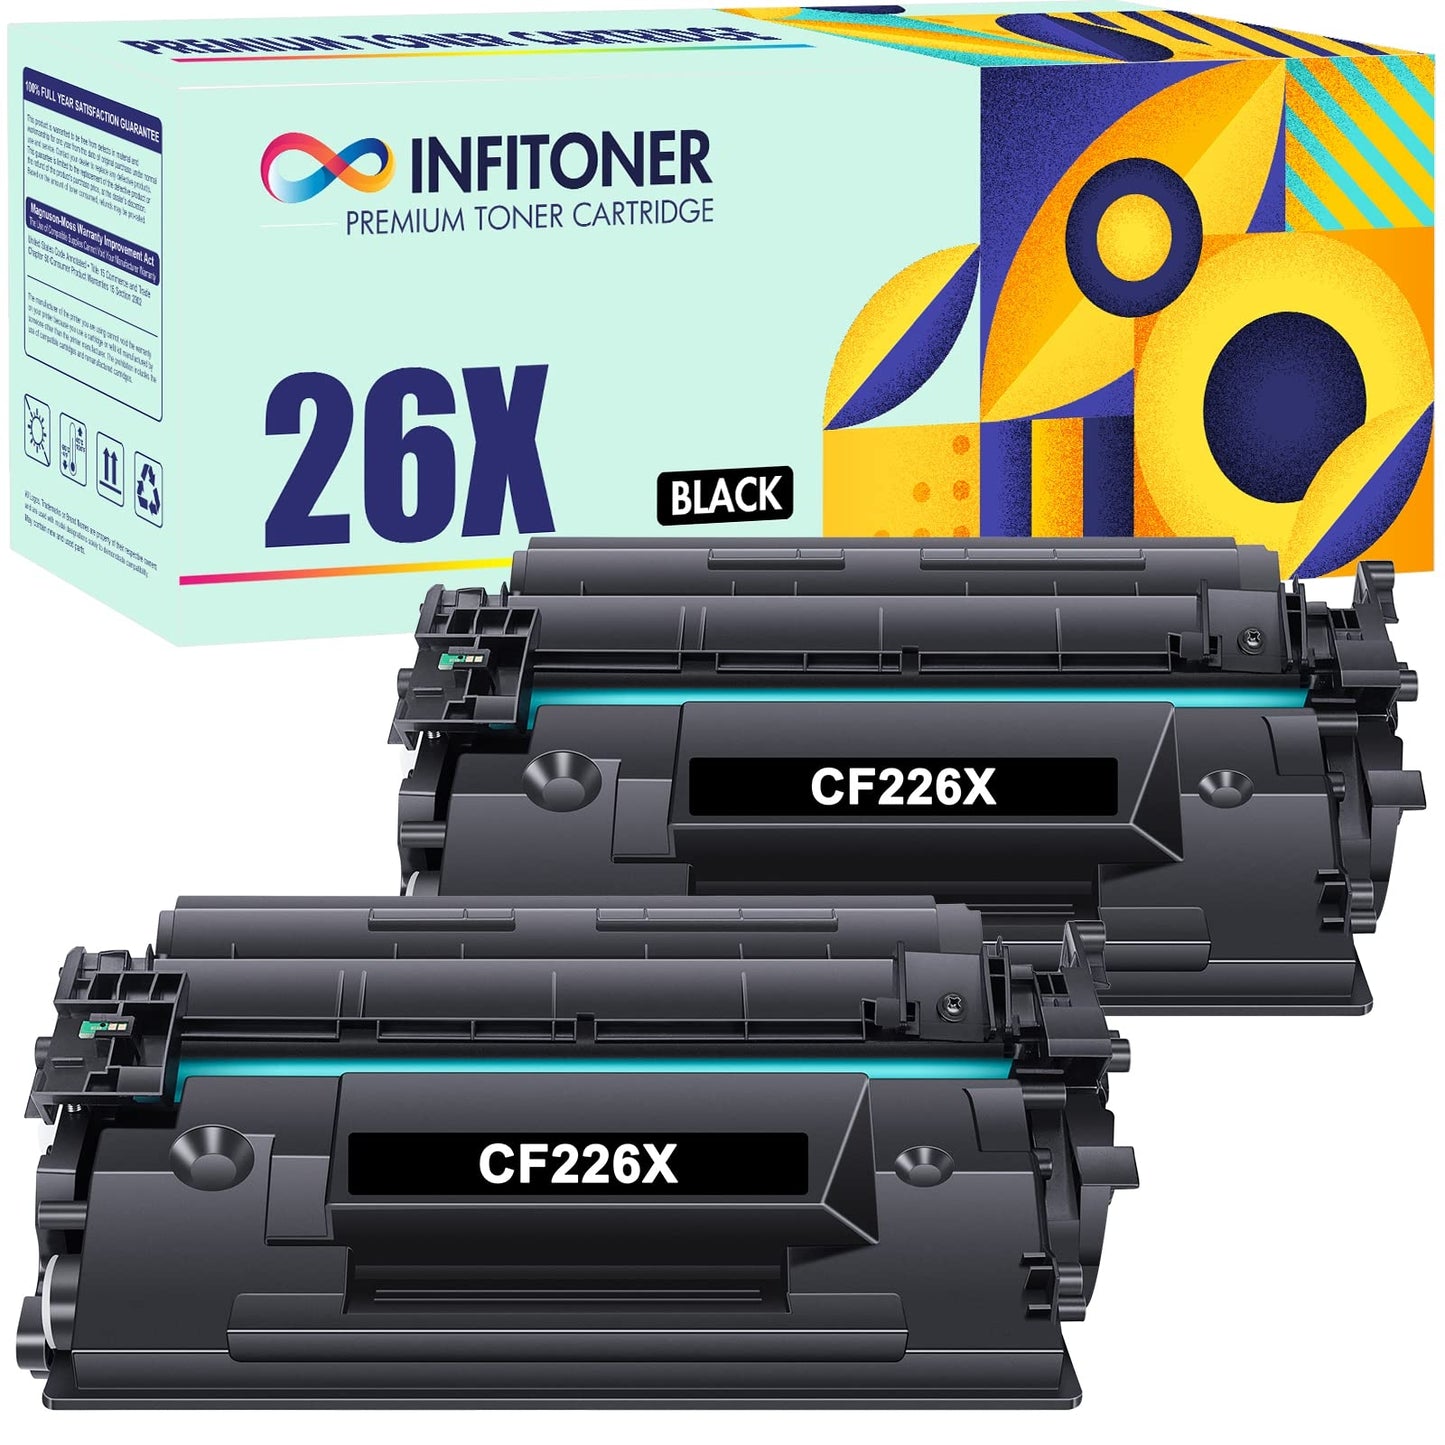 26X CF226X Toner Cartridge 2-Pack Replacement for 26X CF226X Black Toner Cartridge for Pro M402N M402DN M402DW MFP M426FDW M426FDN M426DW Series Printer